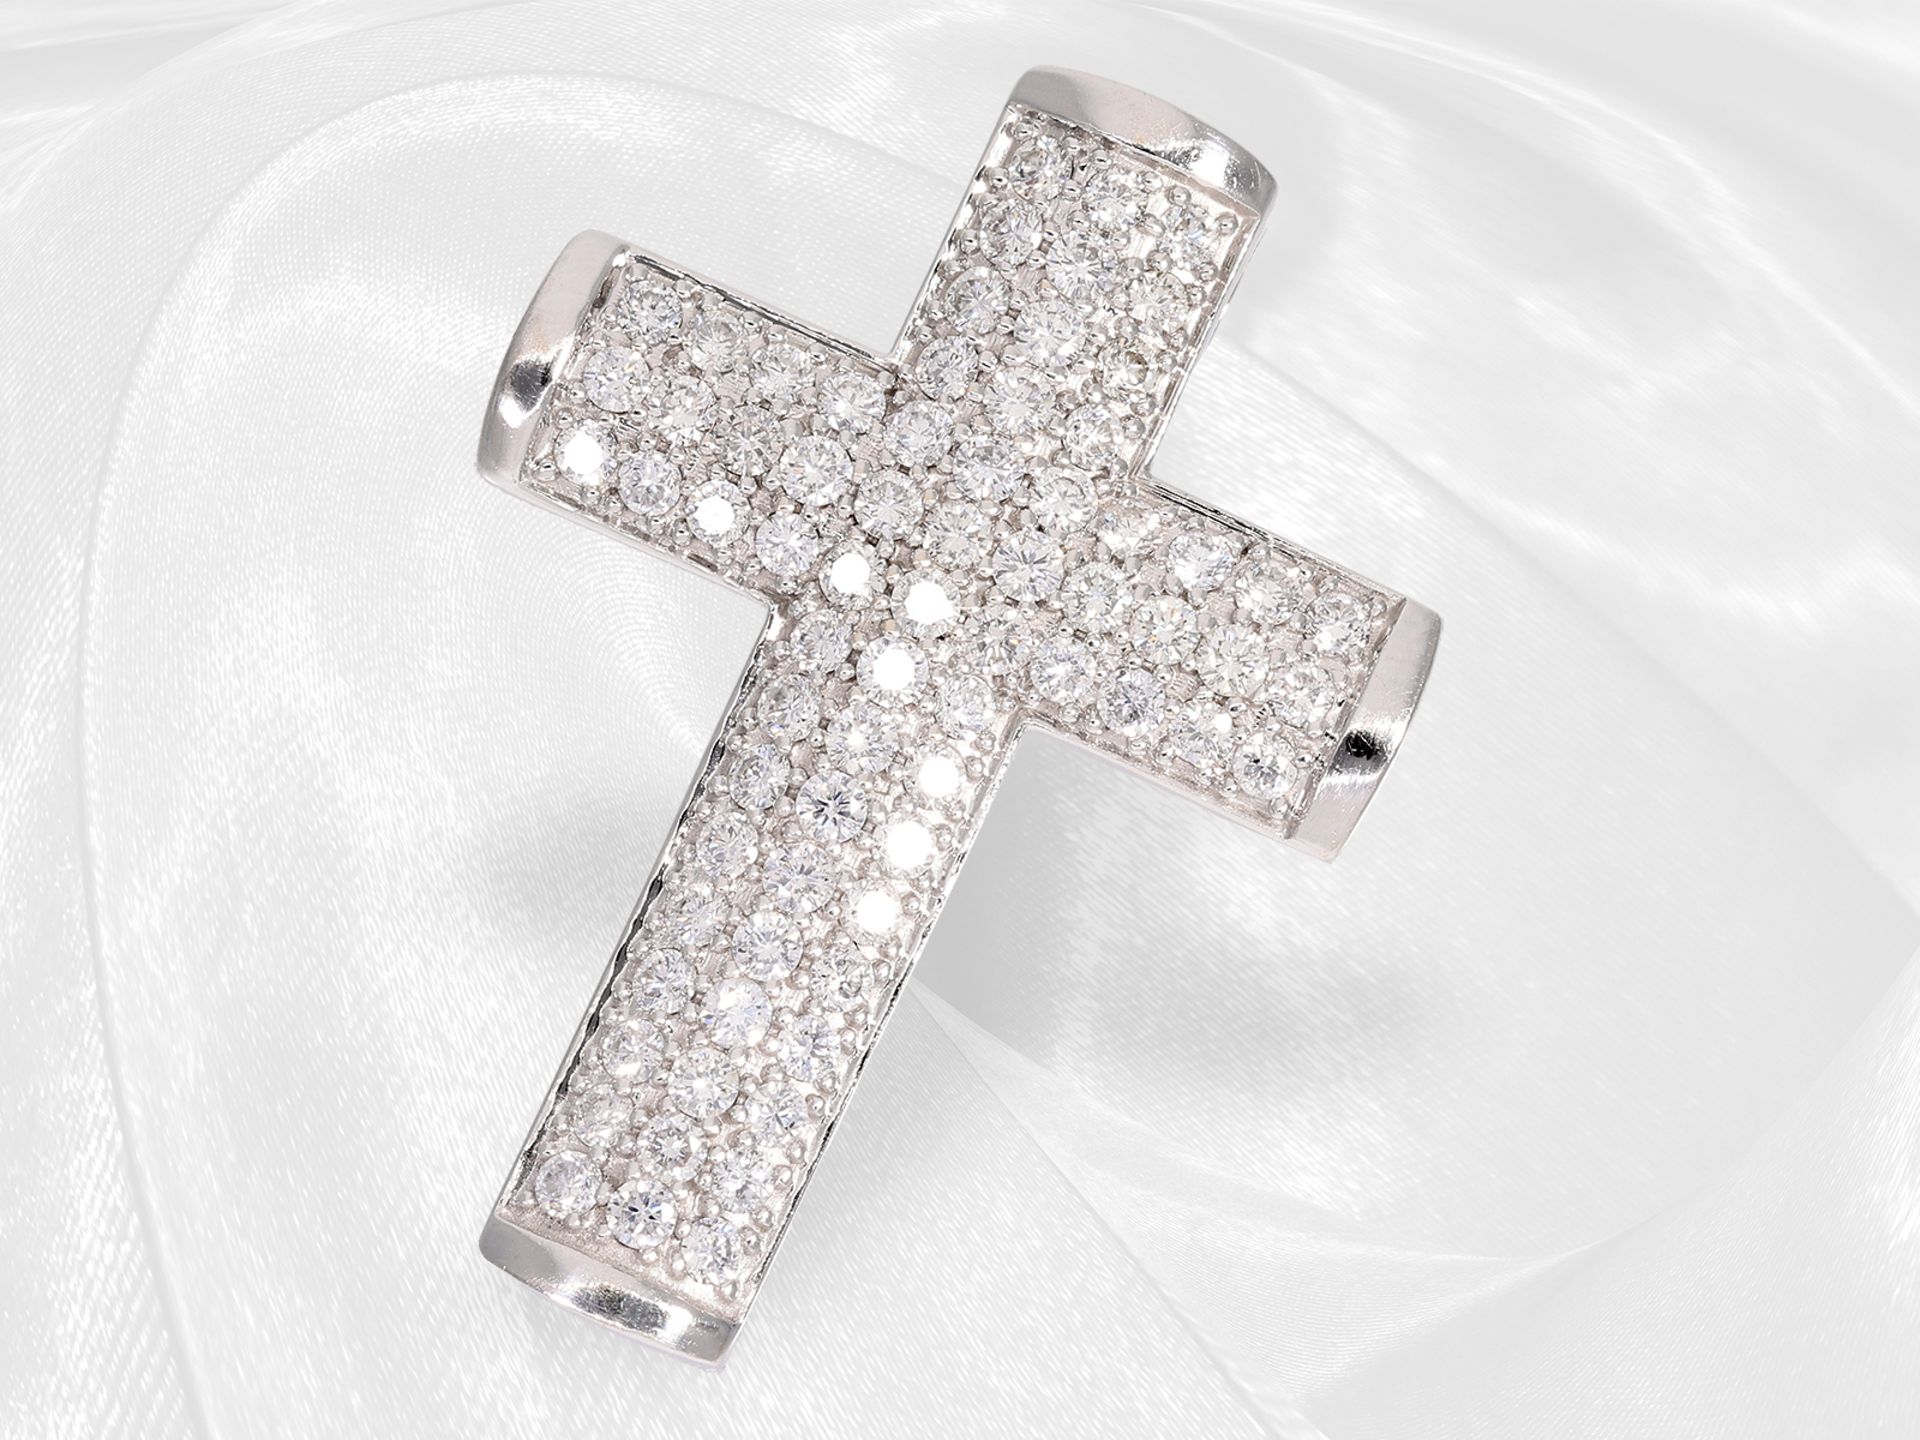 Pendant: modern white gold diamond cross pendant, about 1ct diamonds - Image 2 of 4